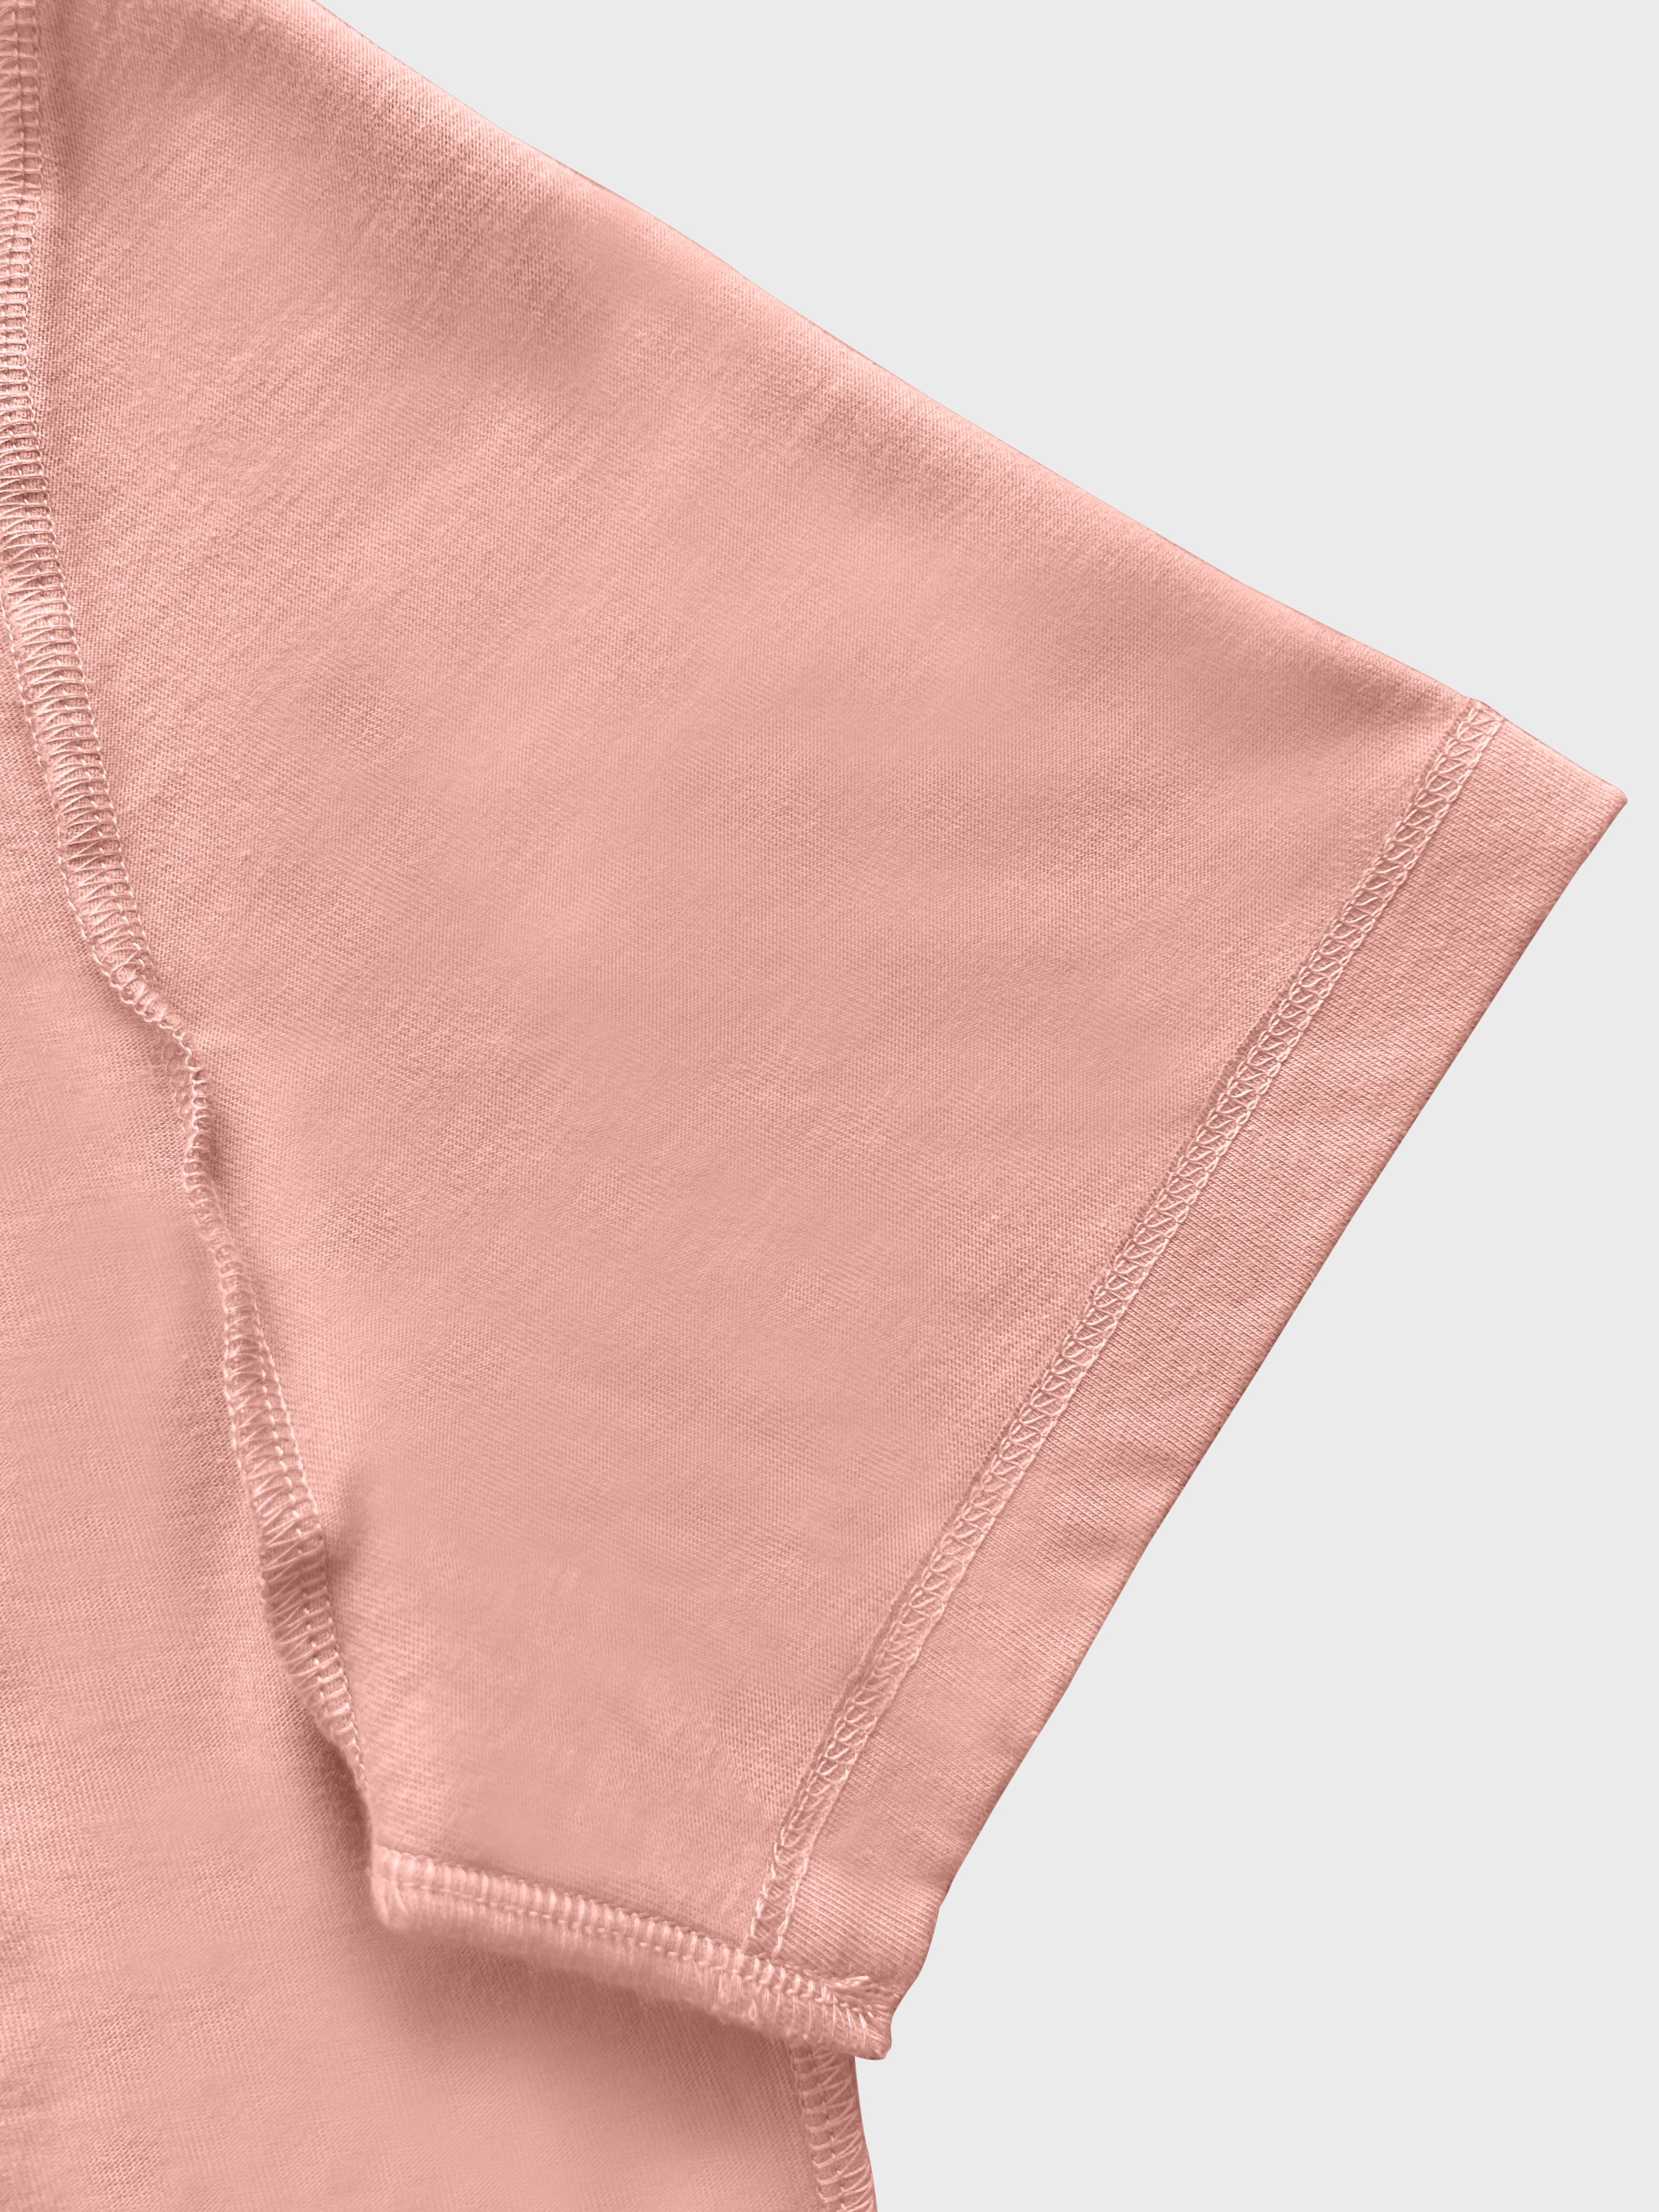 Crew Neck Desert Pink blank T-shirt with short sleeve